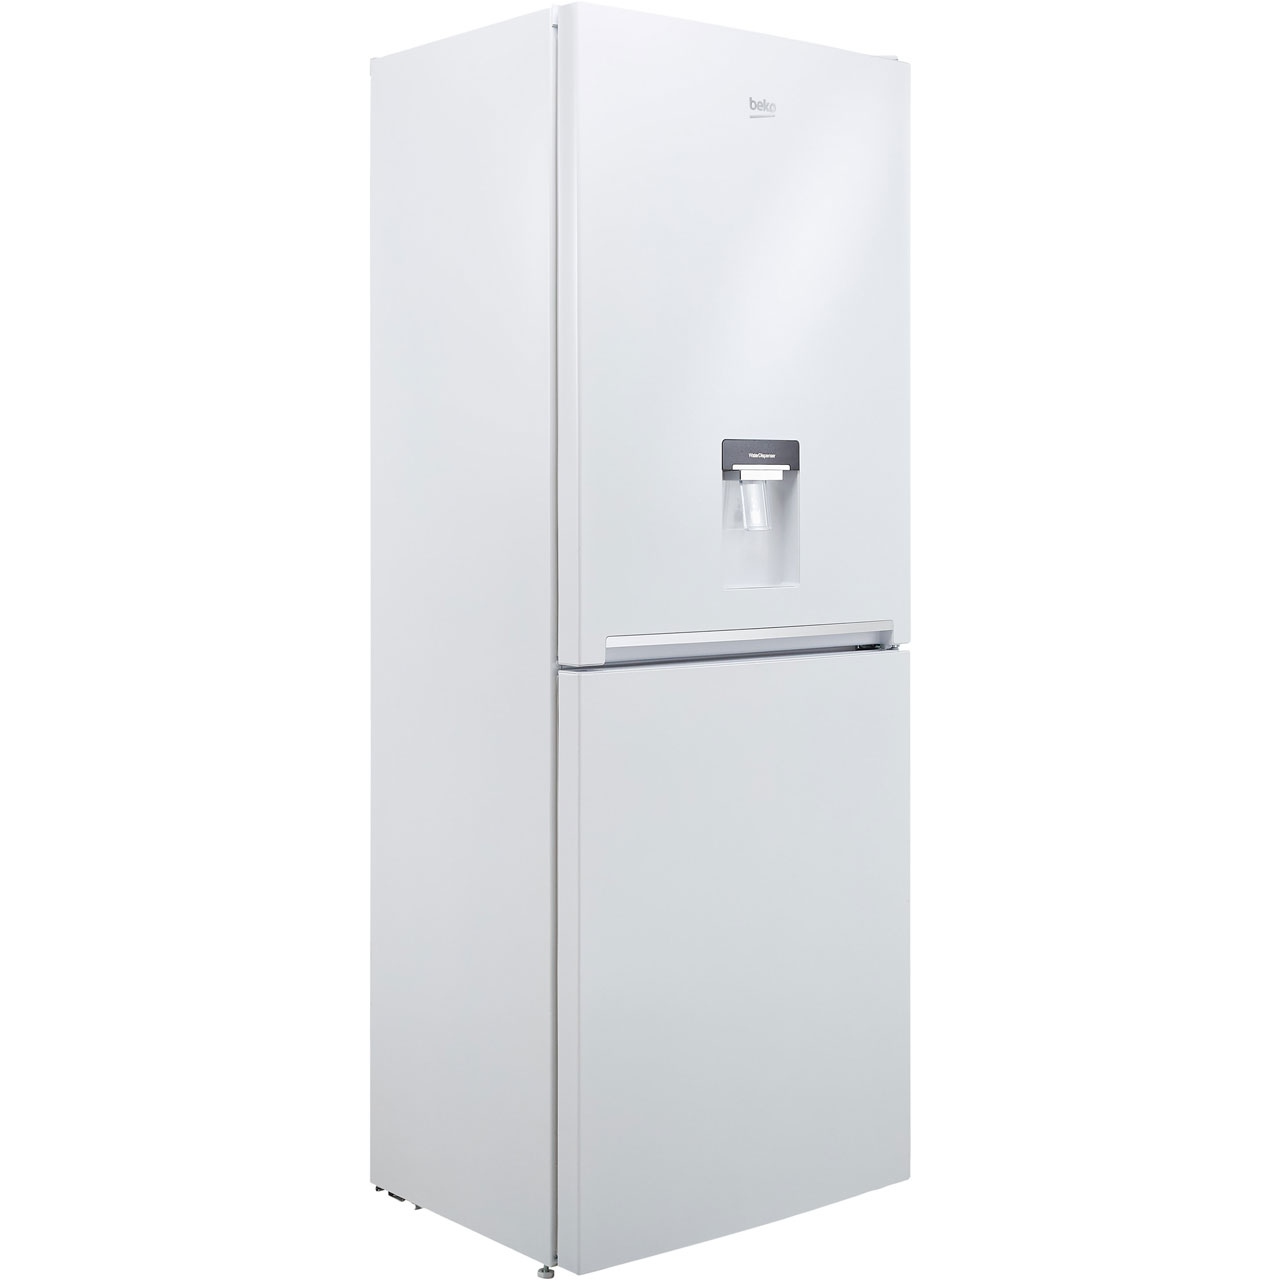 Beko CFG1790DW A+ 70cm Free Standing Fridge Freezer 50/50 Frost Free White 5023790046039 | eBay